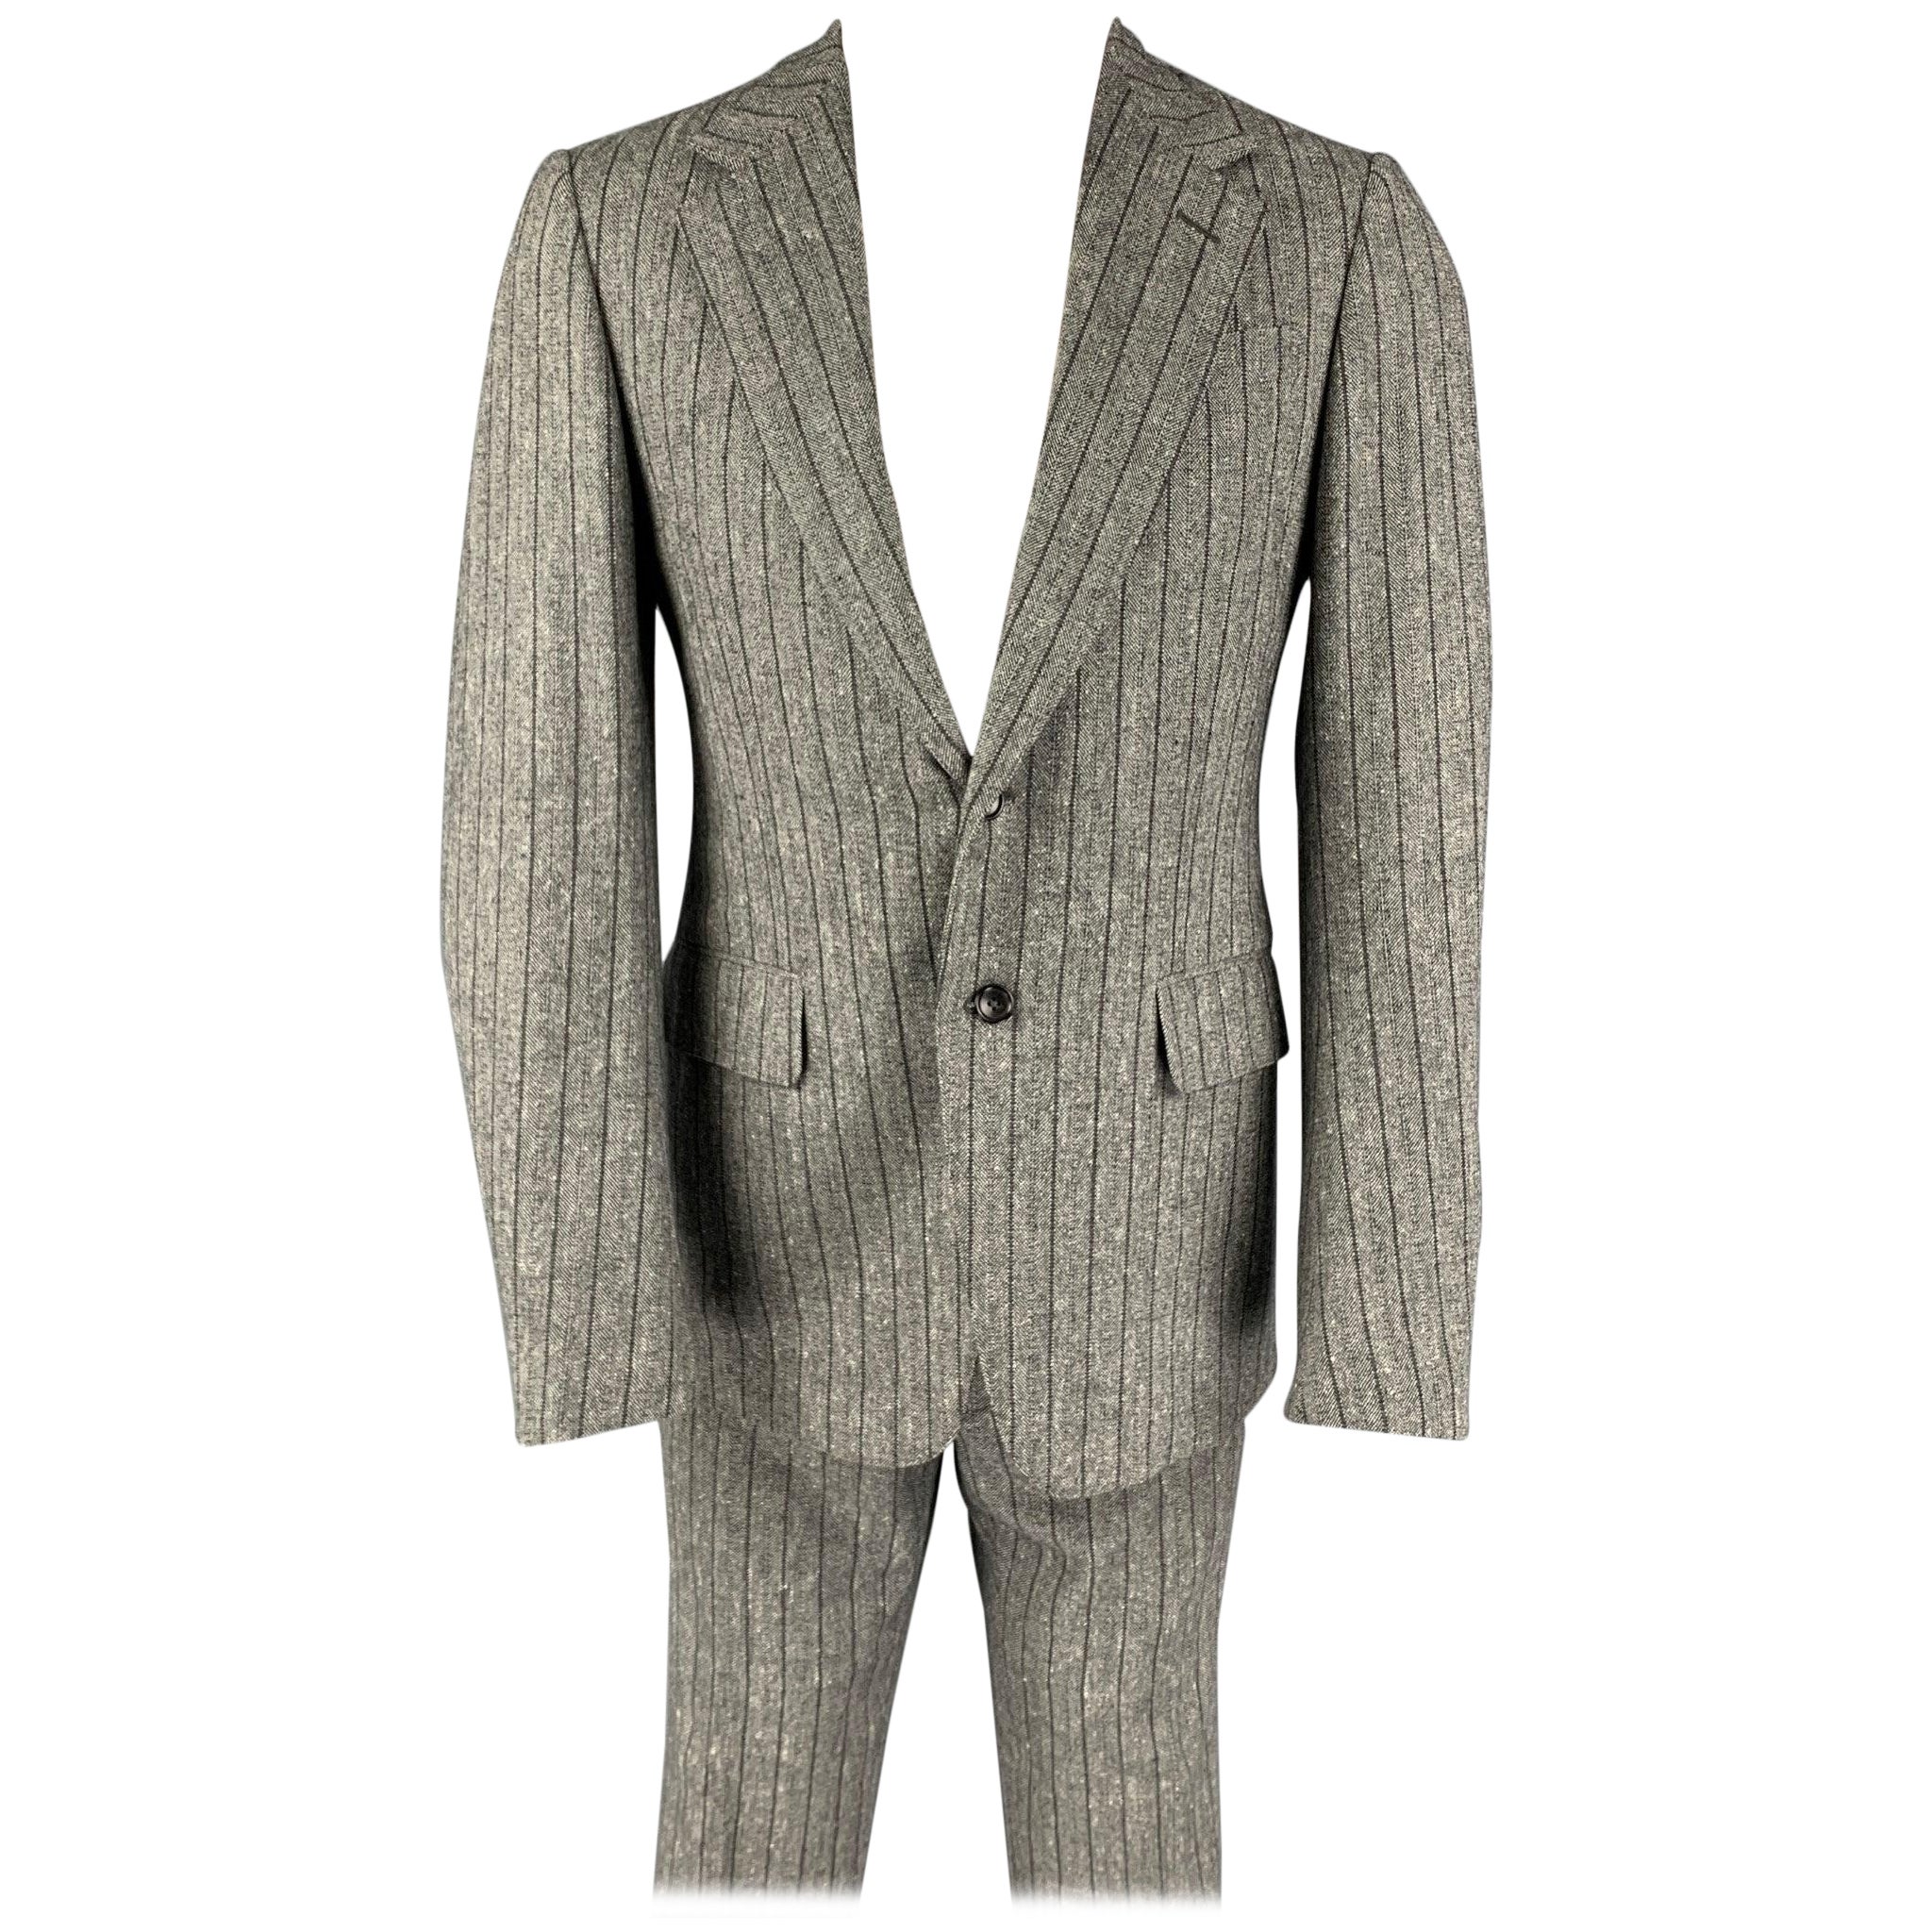 GUCCI Size 38 Grey Stripe Wool Blend Notch Lapel Suit